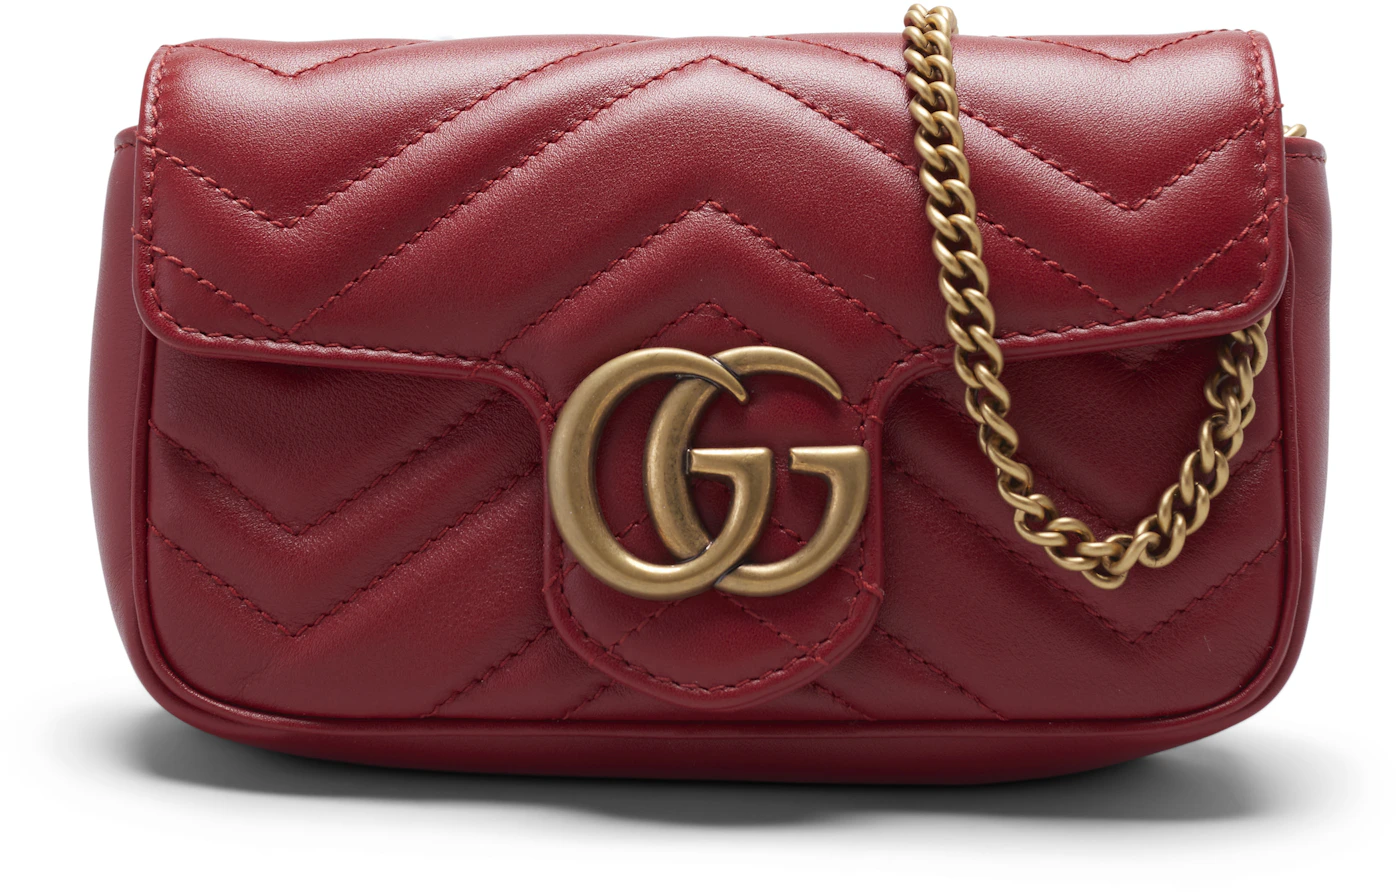 Gucci GG Marmont Matelassé Leather Super Mini Bag Red – Coco Approved Studio